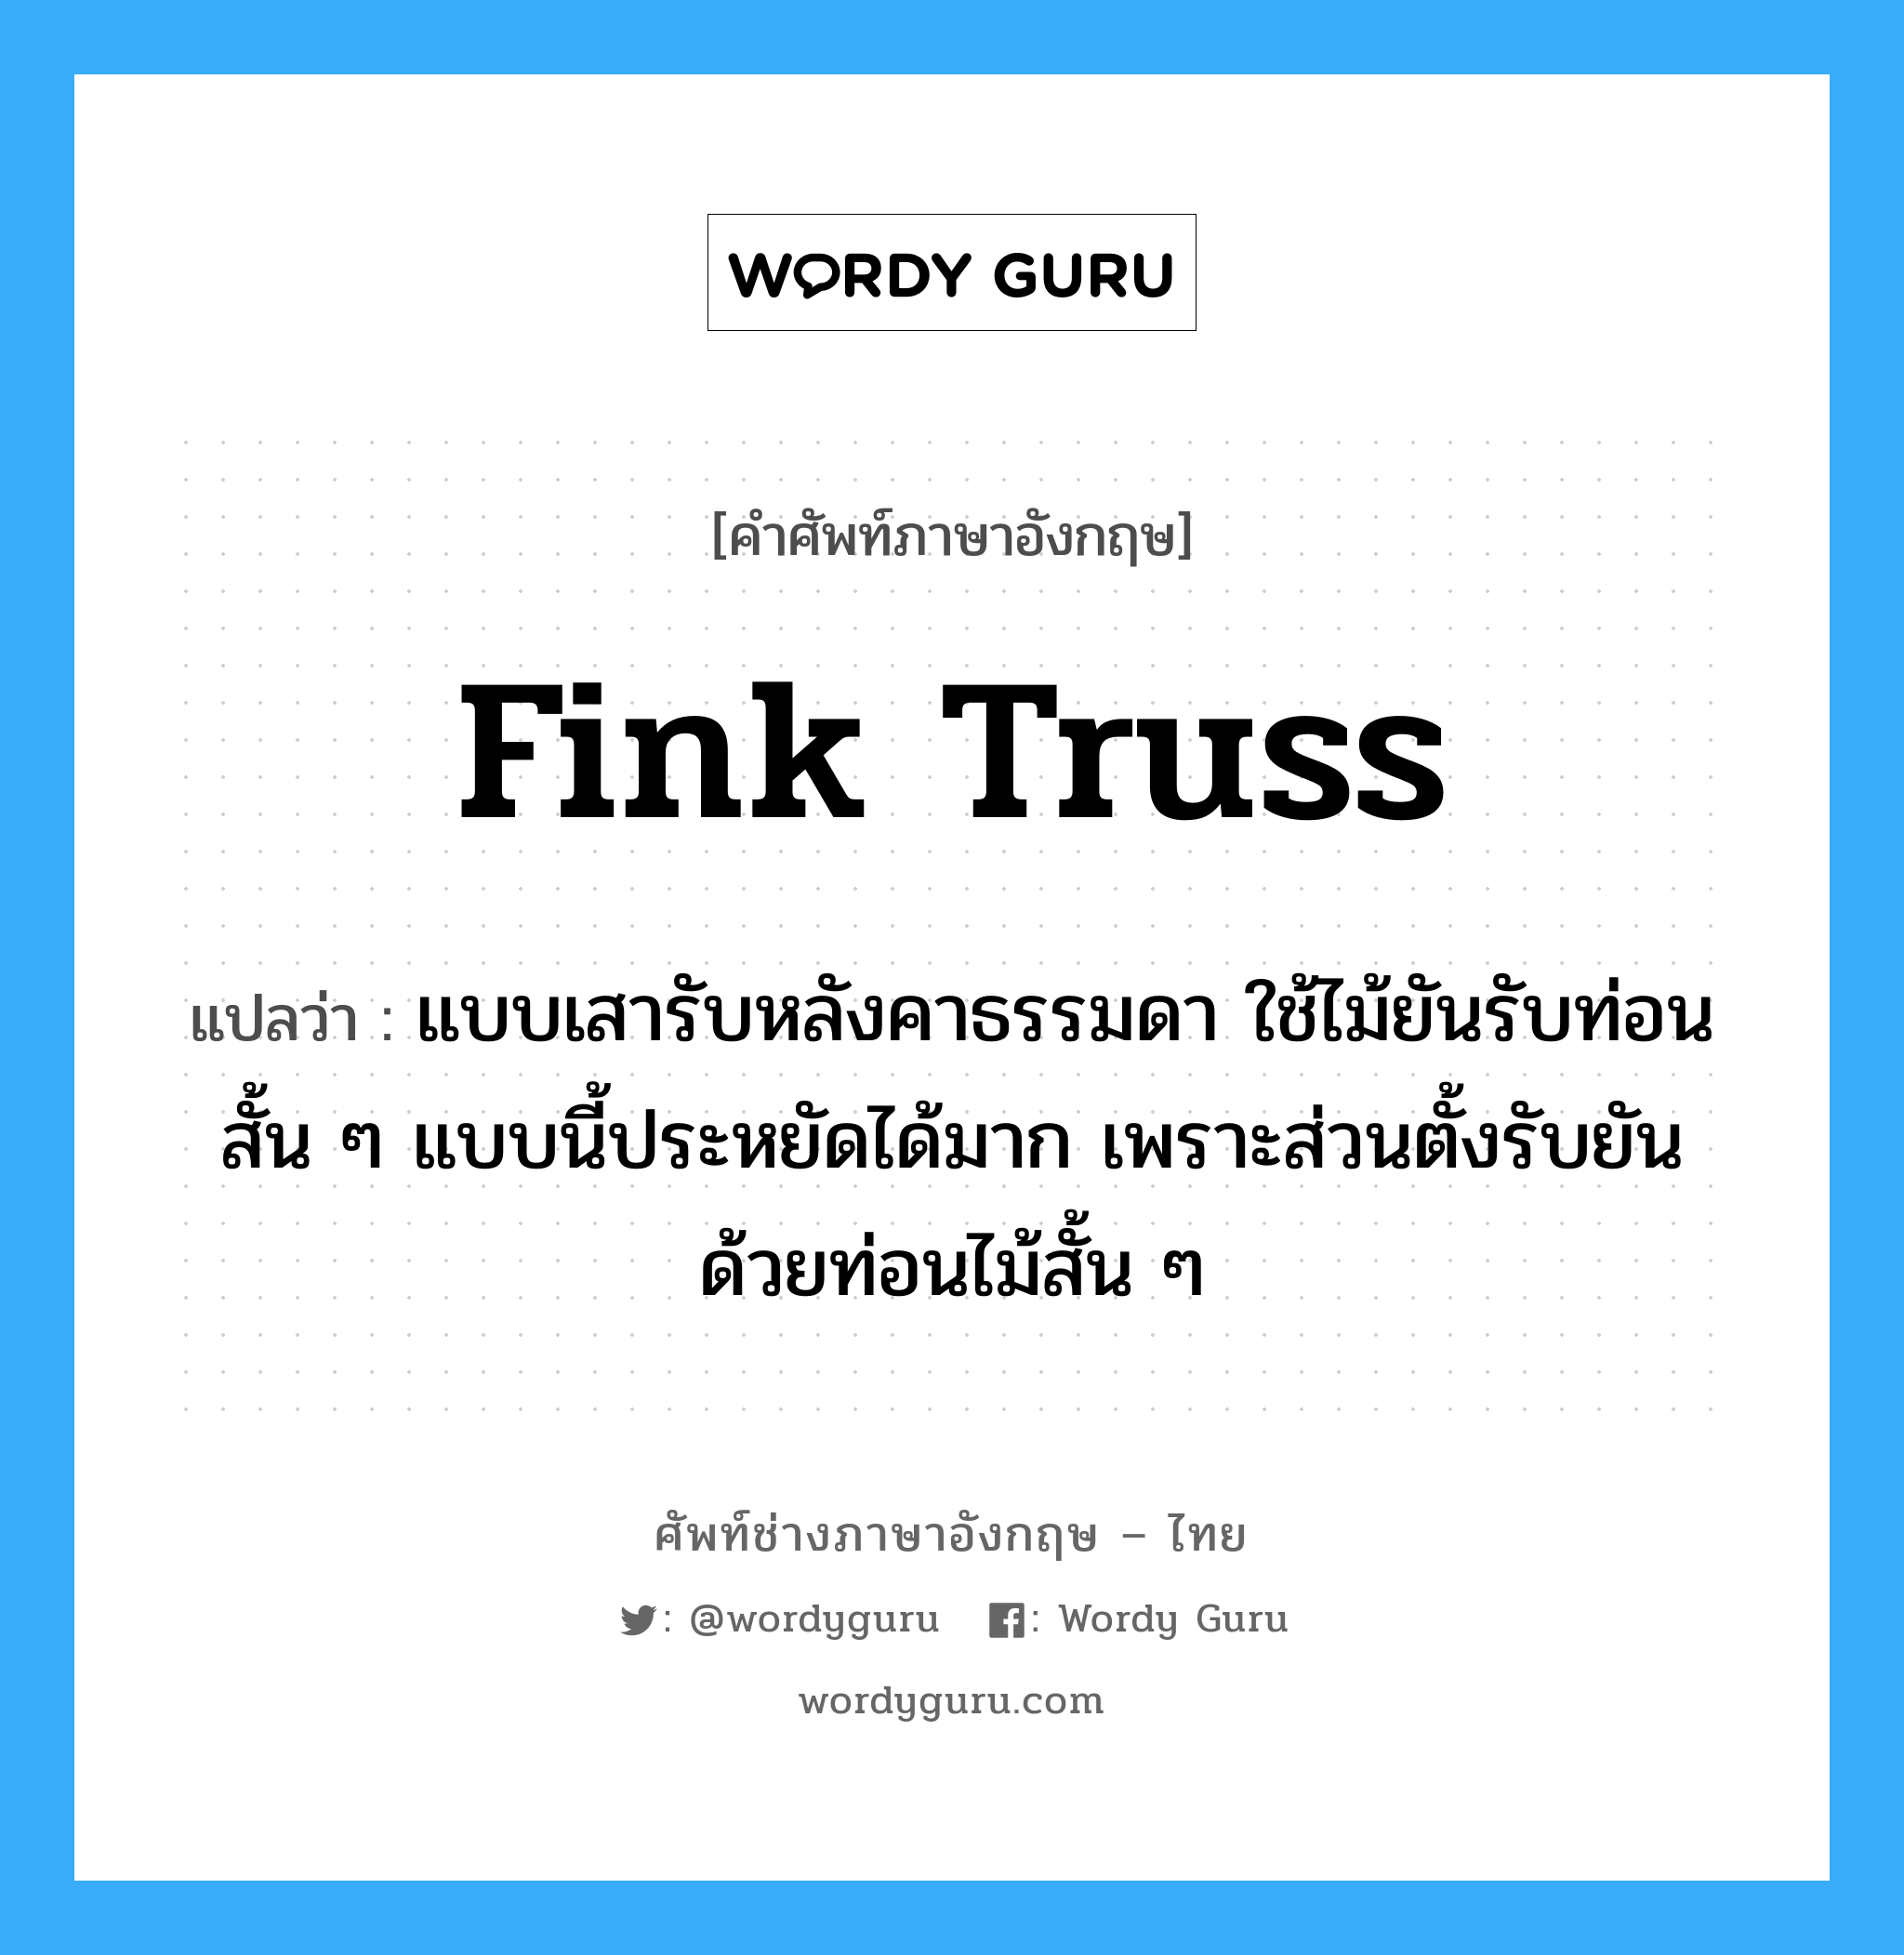 Fink truss แปลว่า?, คำศัพท์ช่างภาษาอังกฤษ - ไทย Fink truss คำศัพท์ภาษาอังกฤษ Fink truss แปลว่า แบบเสารับหลังคาธรรมดา ใช้ไม้ยันรับท่อนสั้น ๆ แบบนี้ประหยัดได้มาก เพราะส่วนตั้งรับยันด้วยท่อนไม้สั้น ๆ